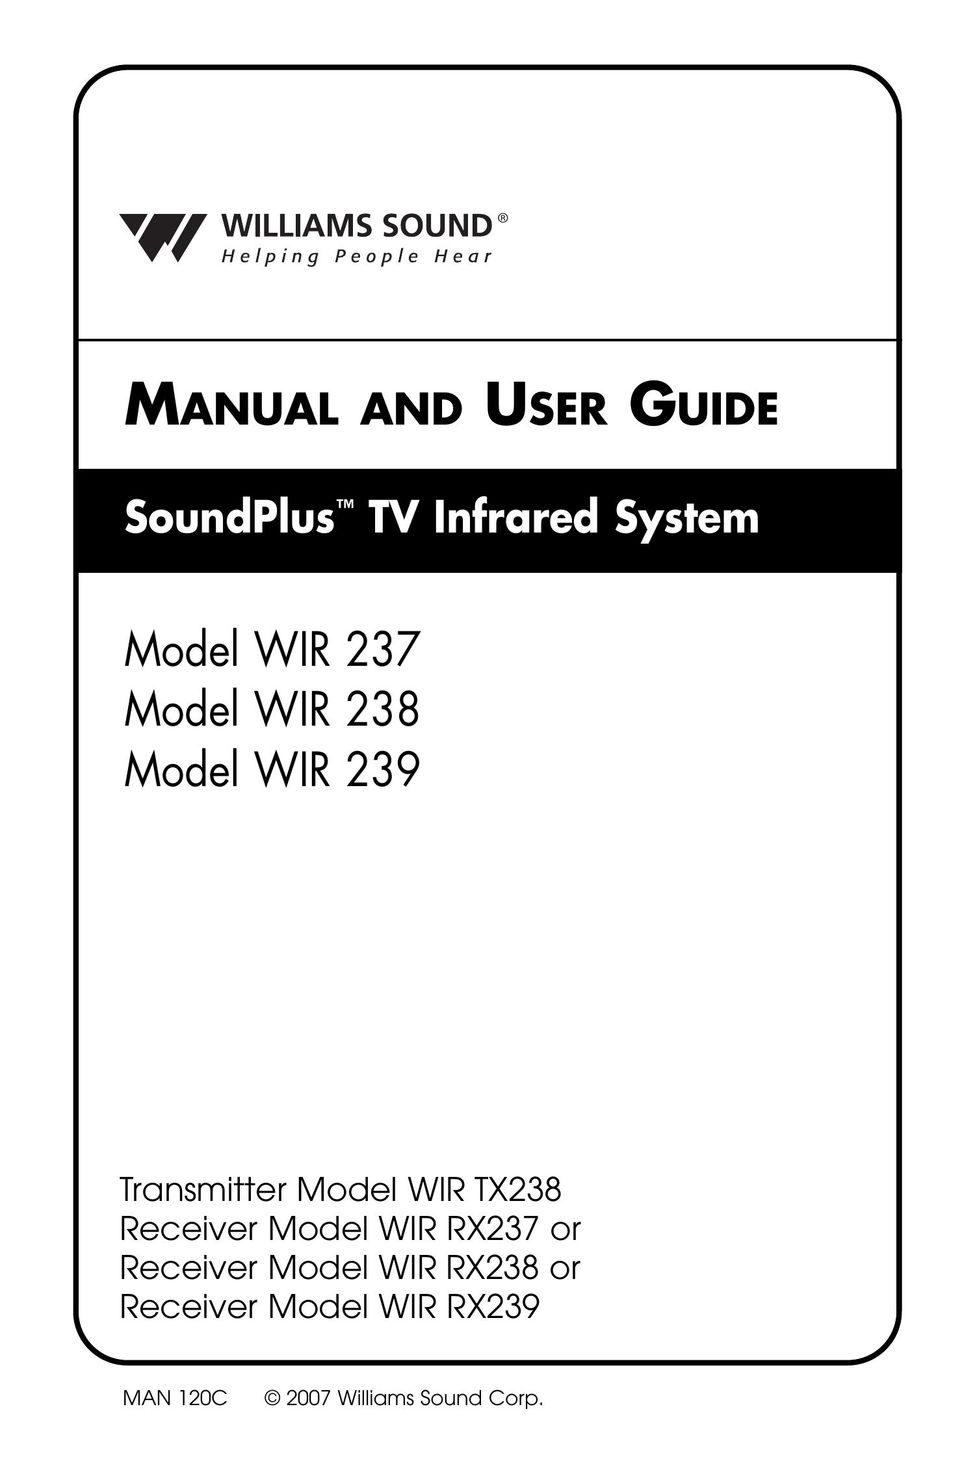 Williams Sound Model WIR 237 Model WIR 238 Model WIR 239 Video Game Sound System User Manual